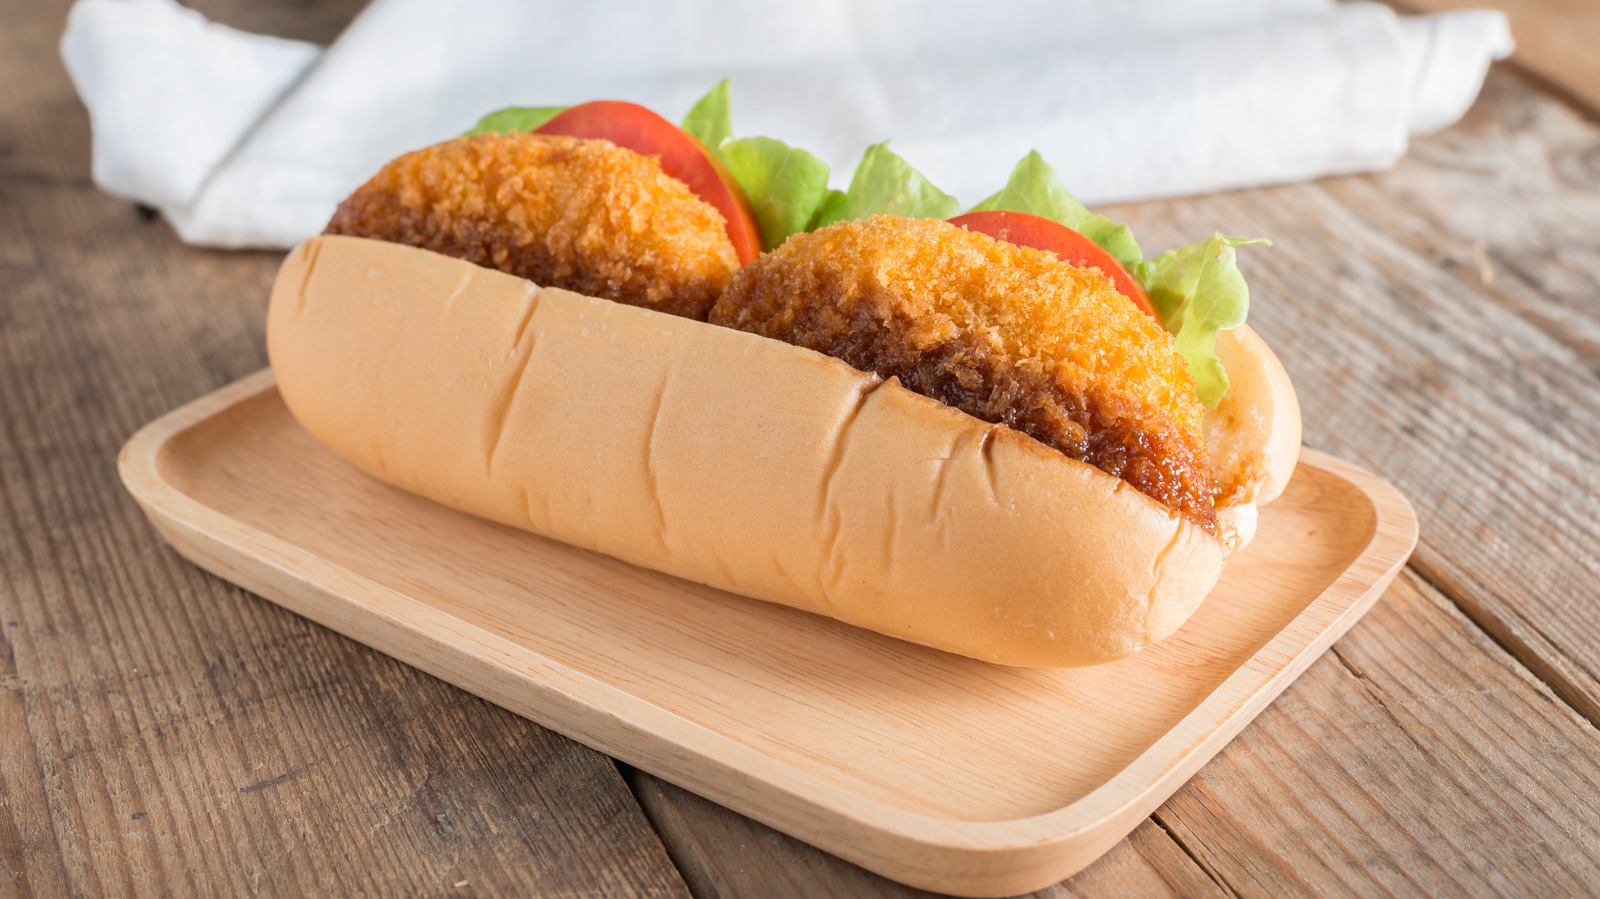 https://www.tastingtable.com/img/gallery/japans-korokke-pan-is-a-mashed-potato-hot-dog-sandwich-hybrid/l-intro-1673555075.jpg